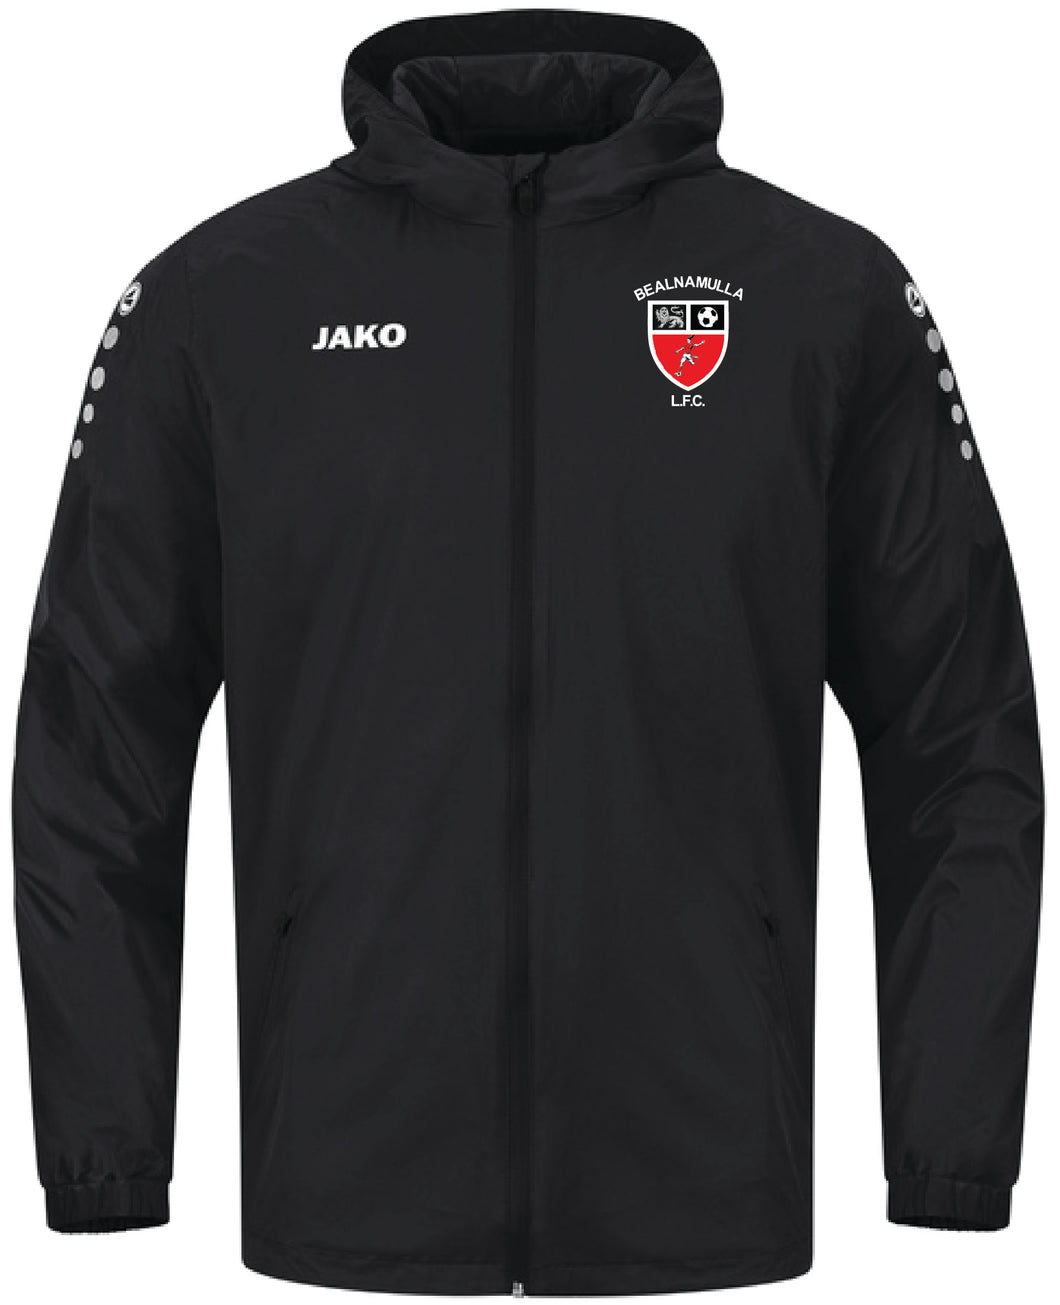 Adults JAKO Bealnamulla LFC Rain jacket Team BE7402